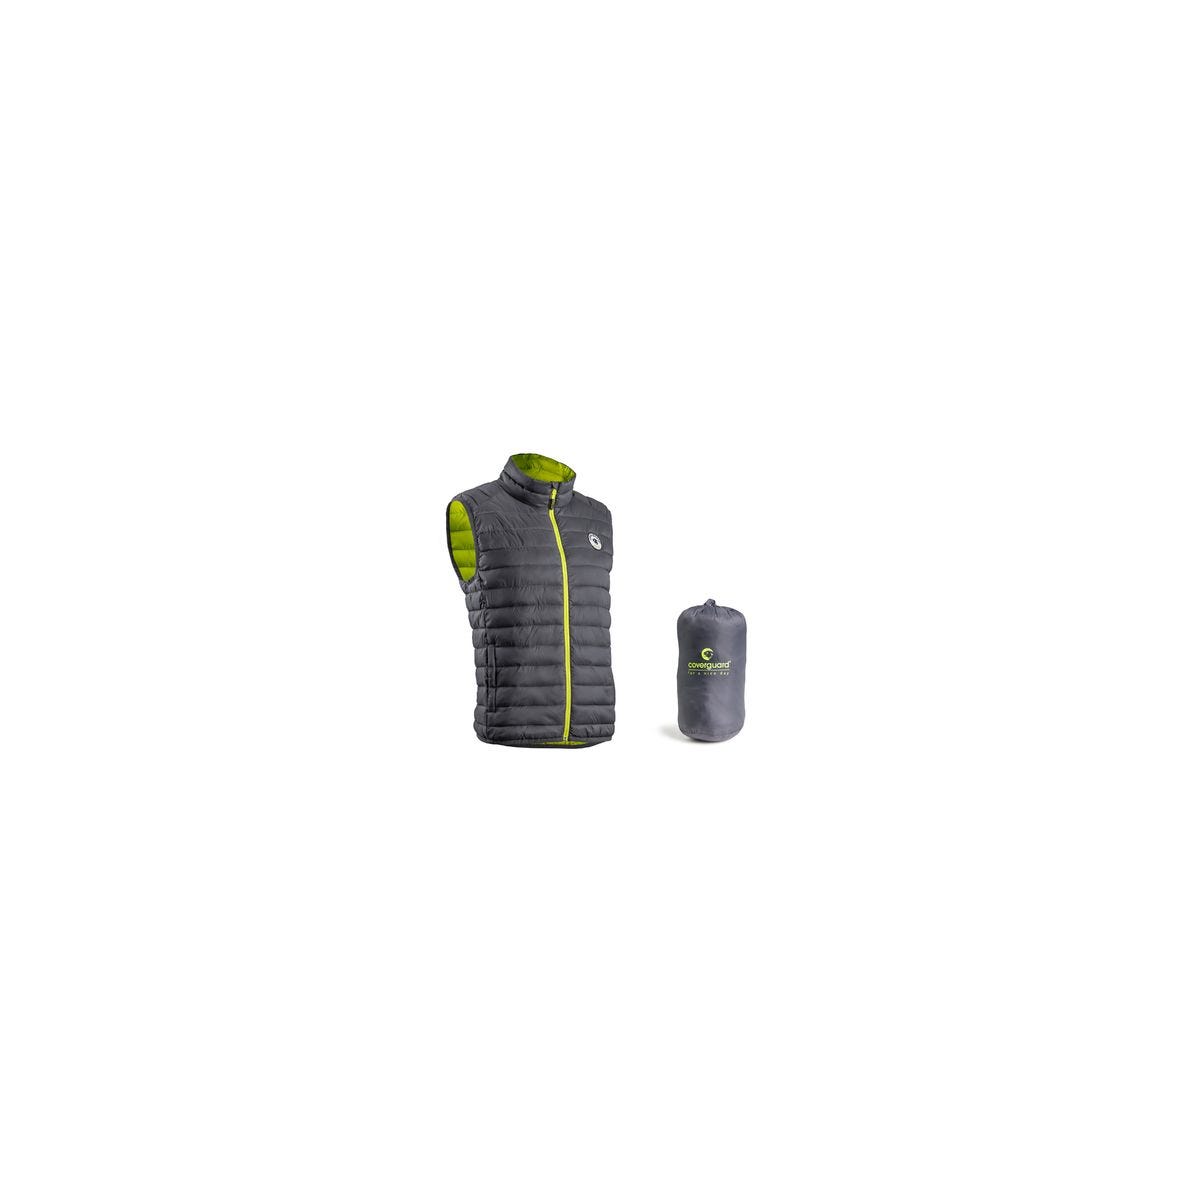 KUMA Gilet Froid gris/jaune, 100%PA + Matelassage 100g/m² - Coverguard - Taille S 0